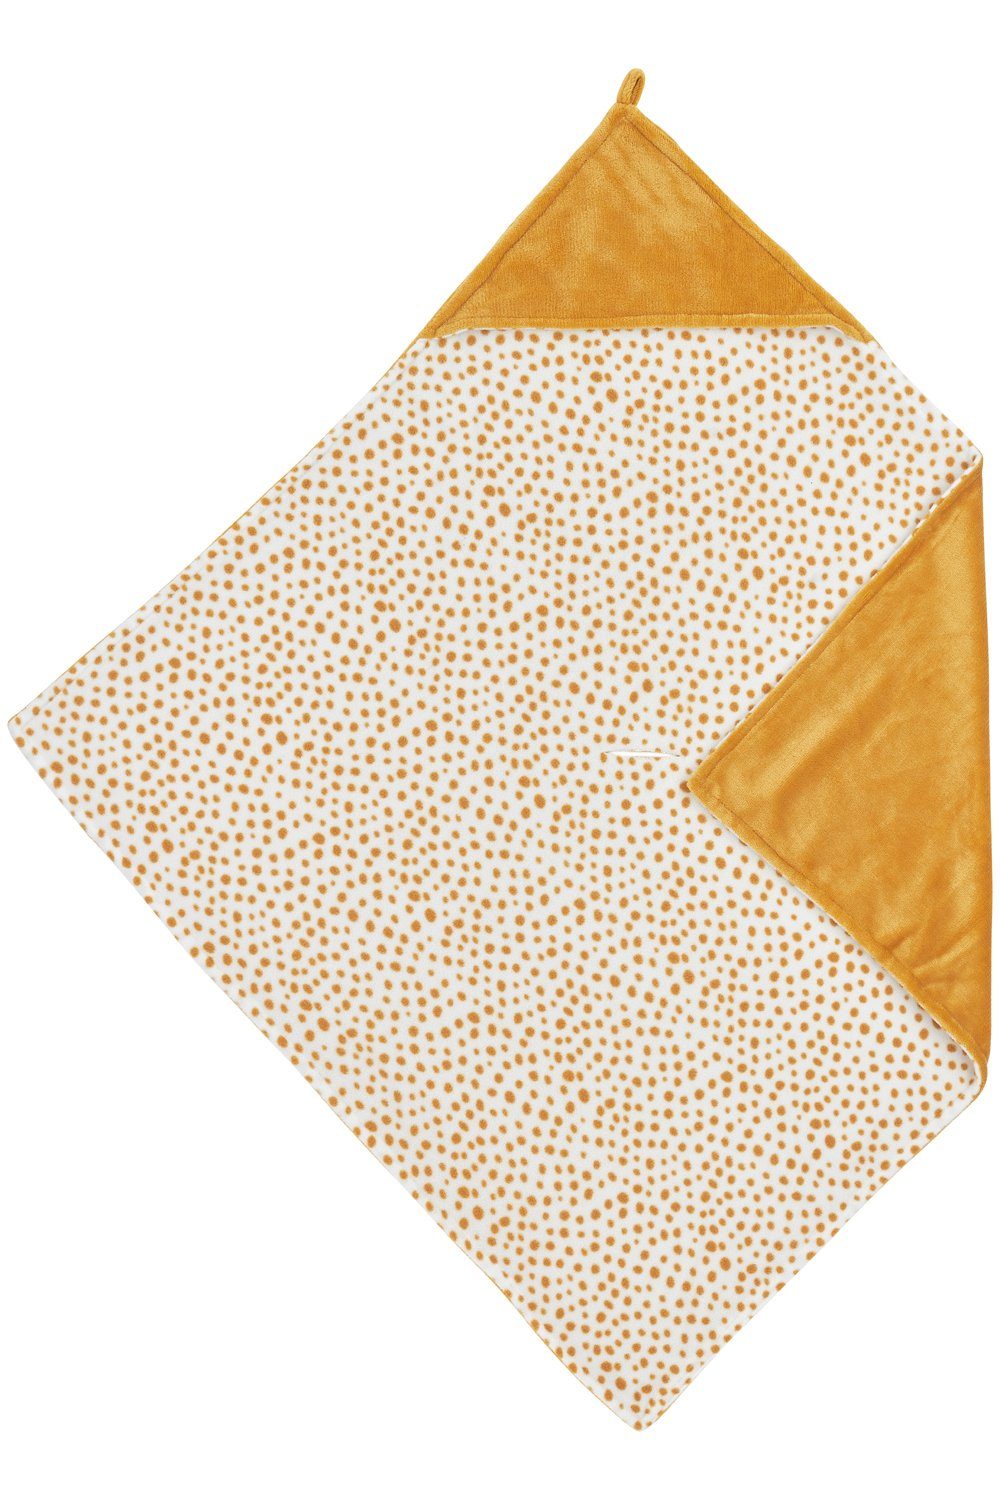 Meyco Baby Kapuzenhandtuch Jersey Gold, Honey (1-St), Cheetah 80x80cm